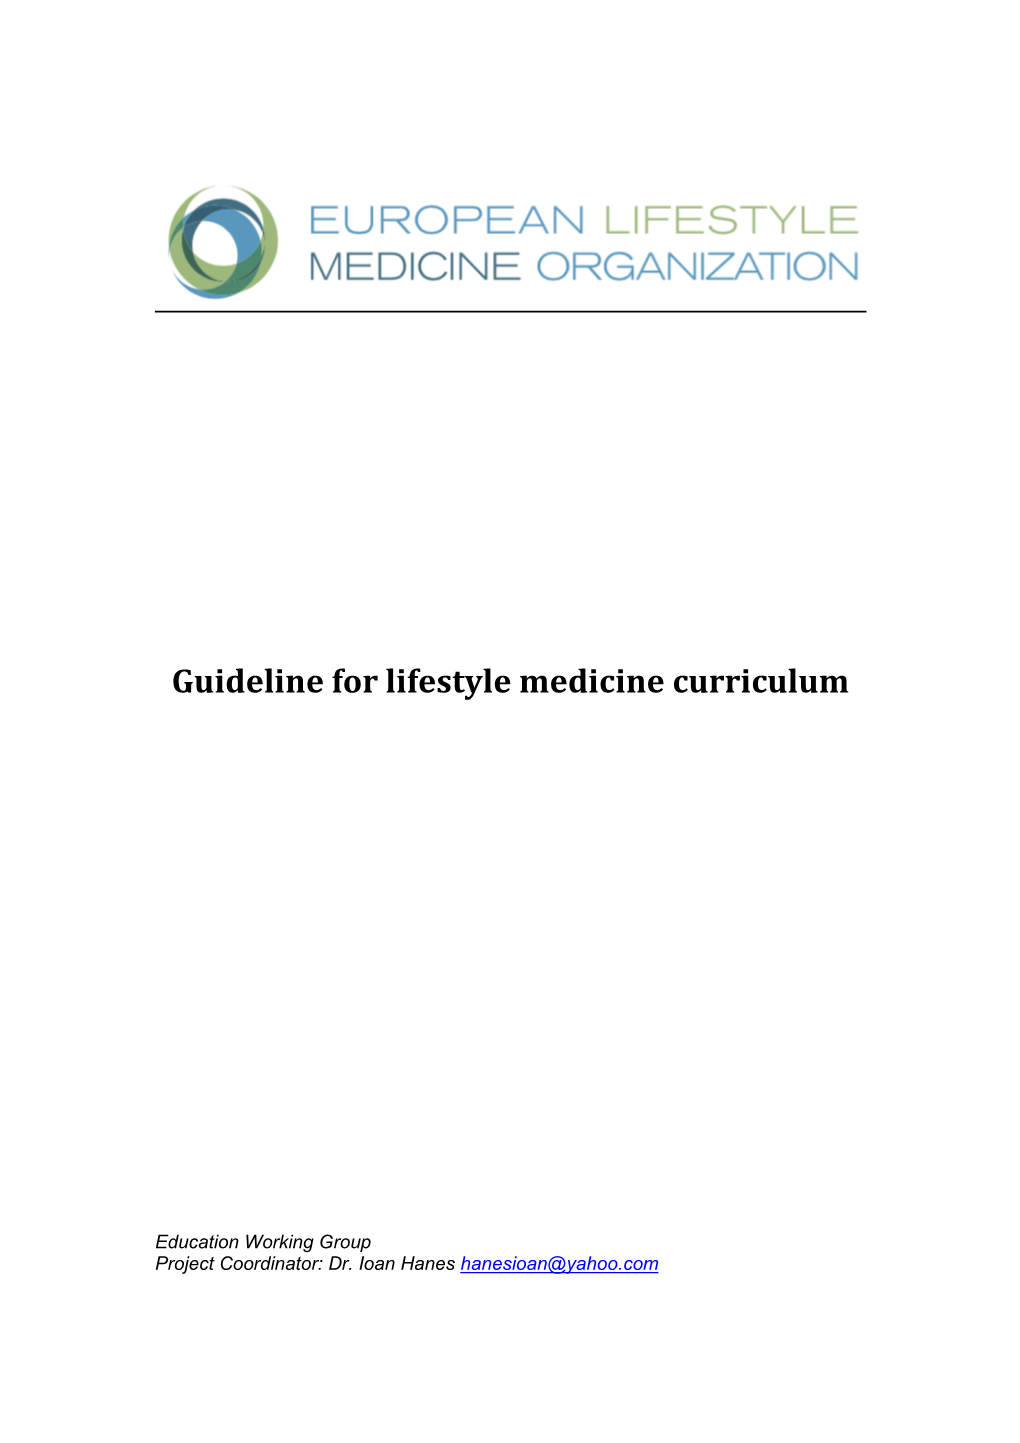 Guideline for Lifestyle Medicine Curriculum